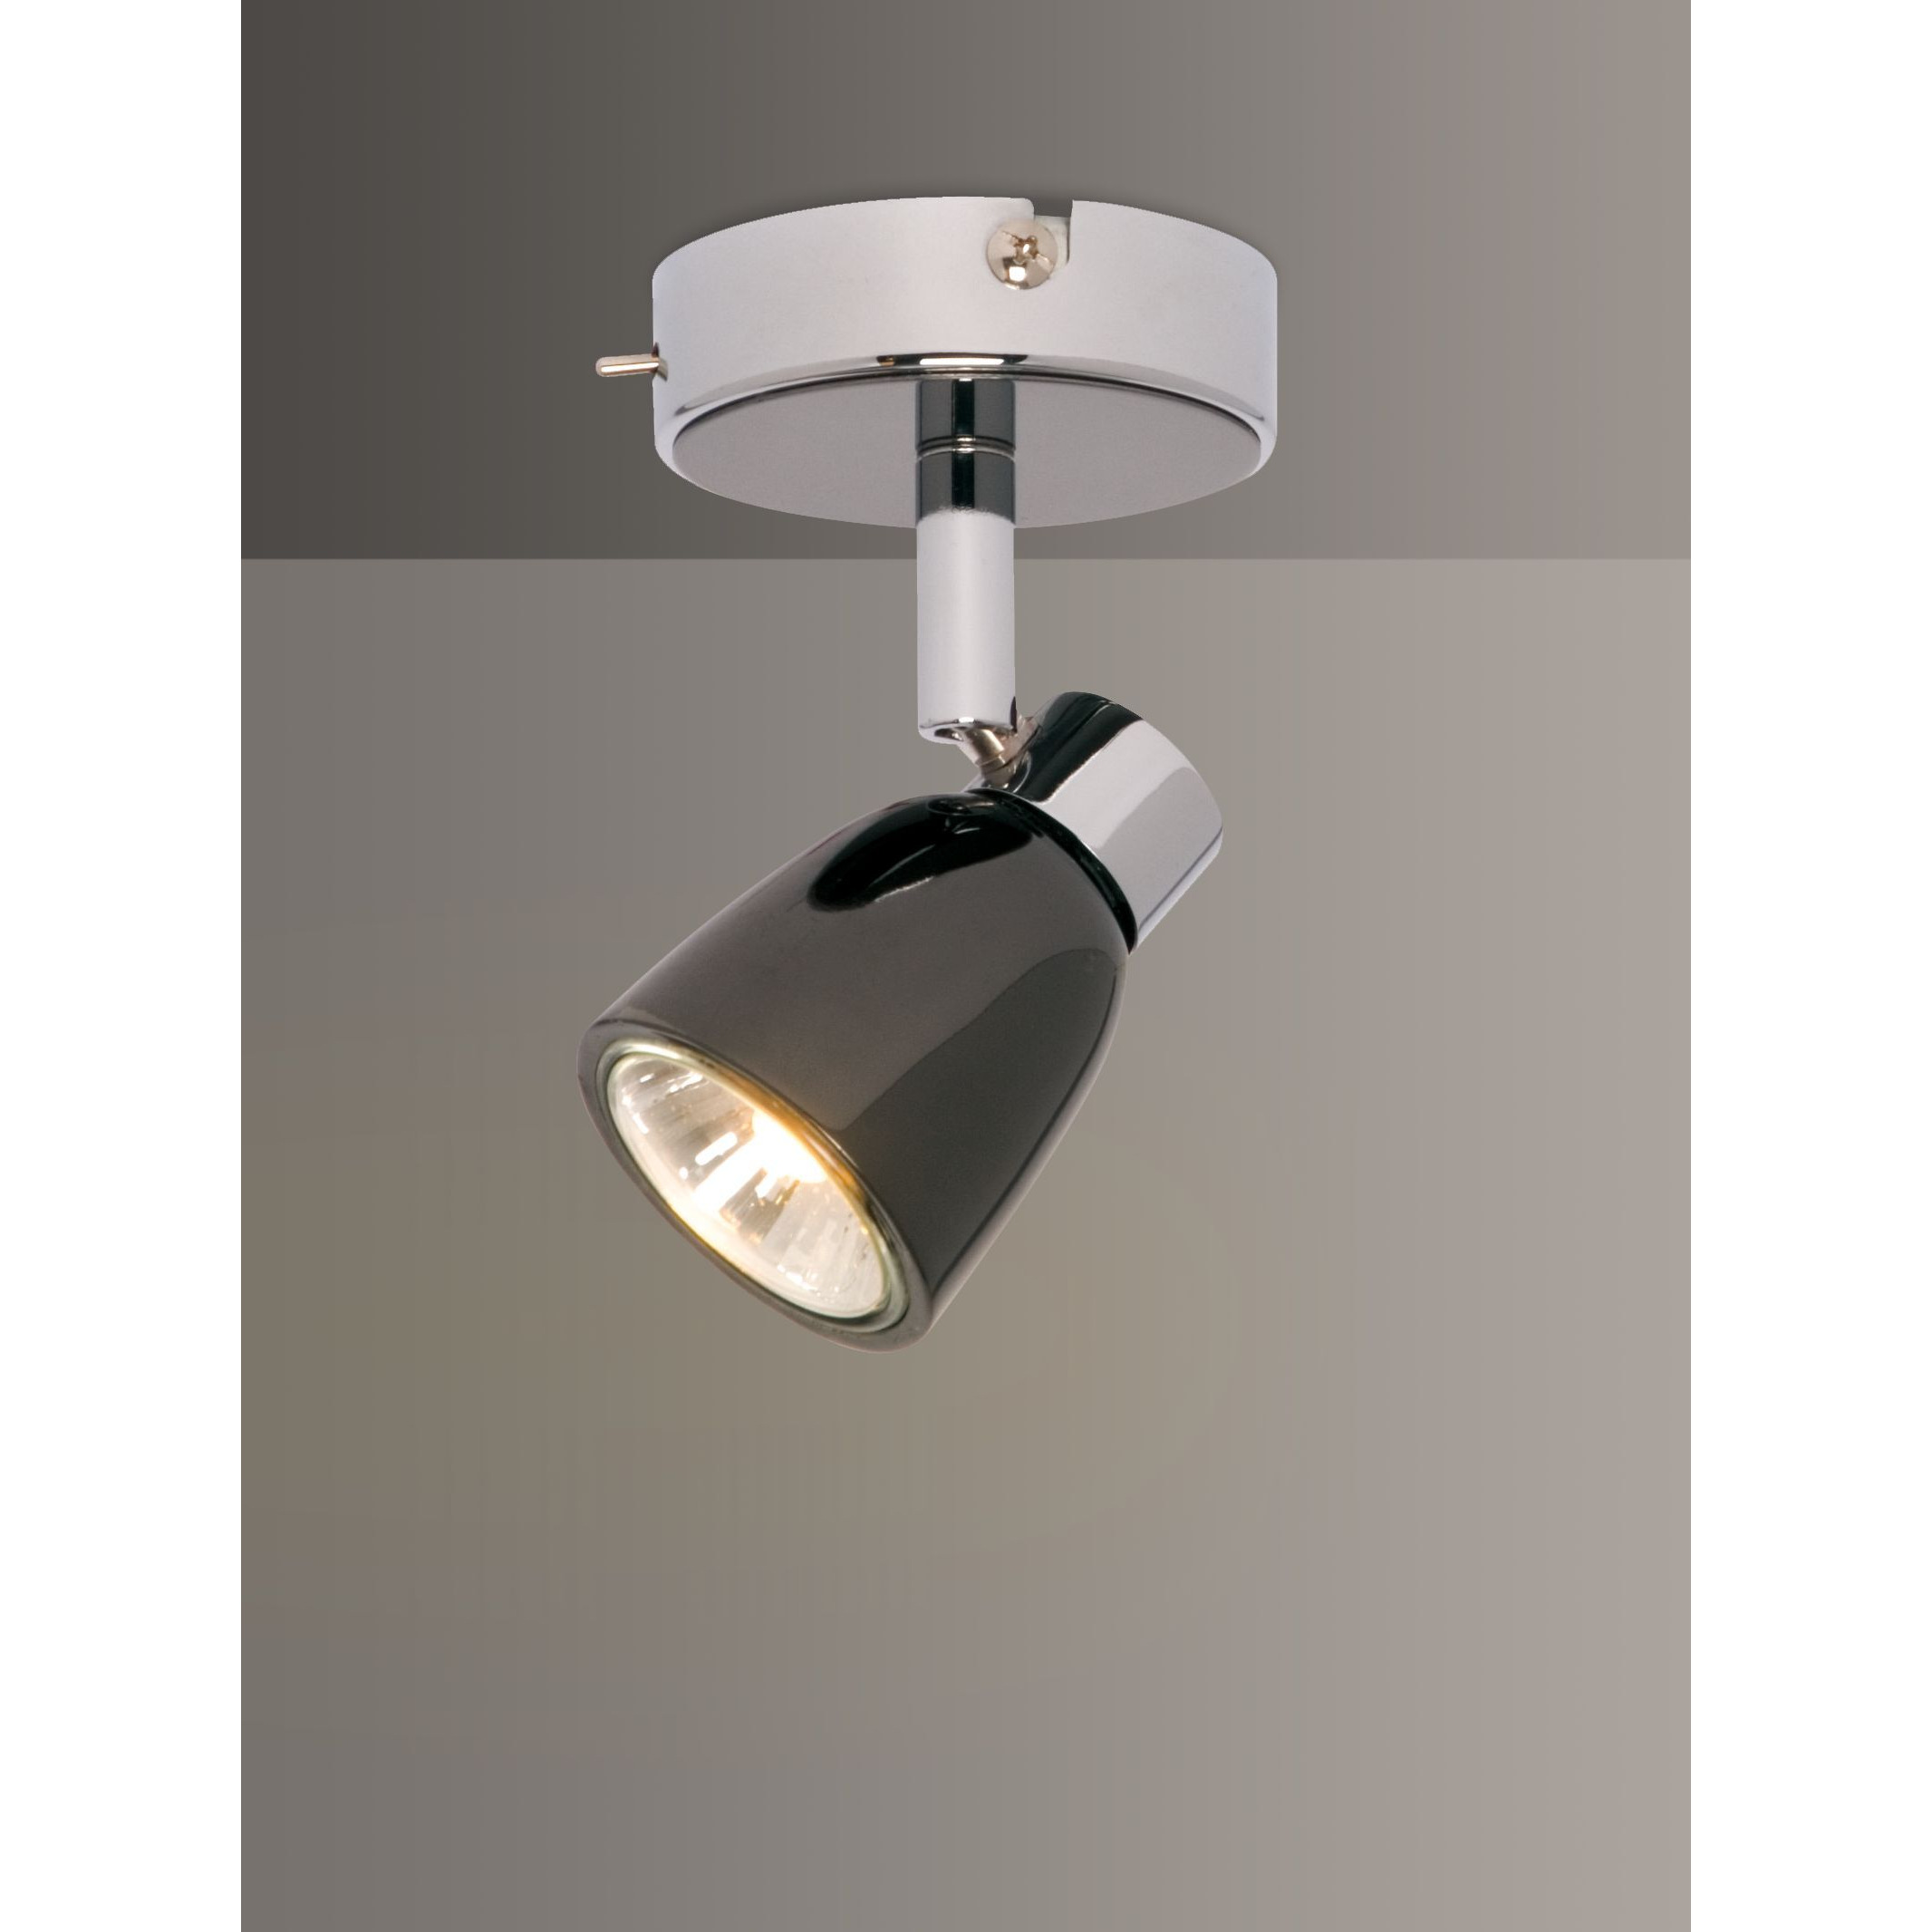 John Lewis Fenix GU10 LED Single Spotlight, Black Pearl Nickel - image 1